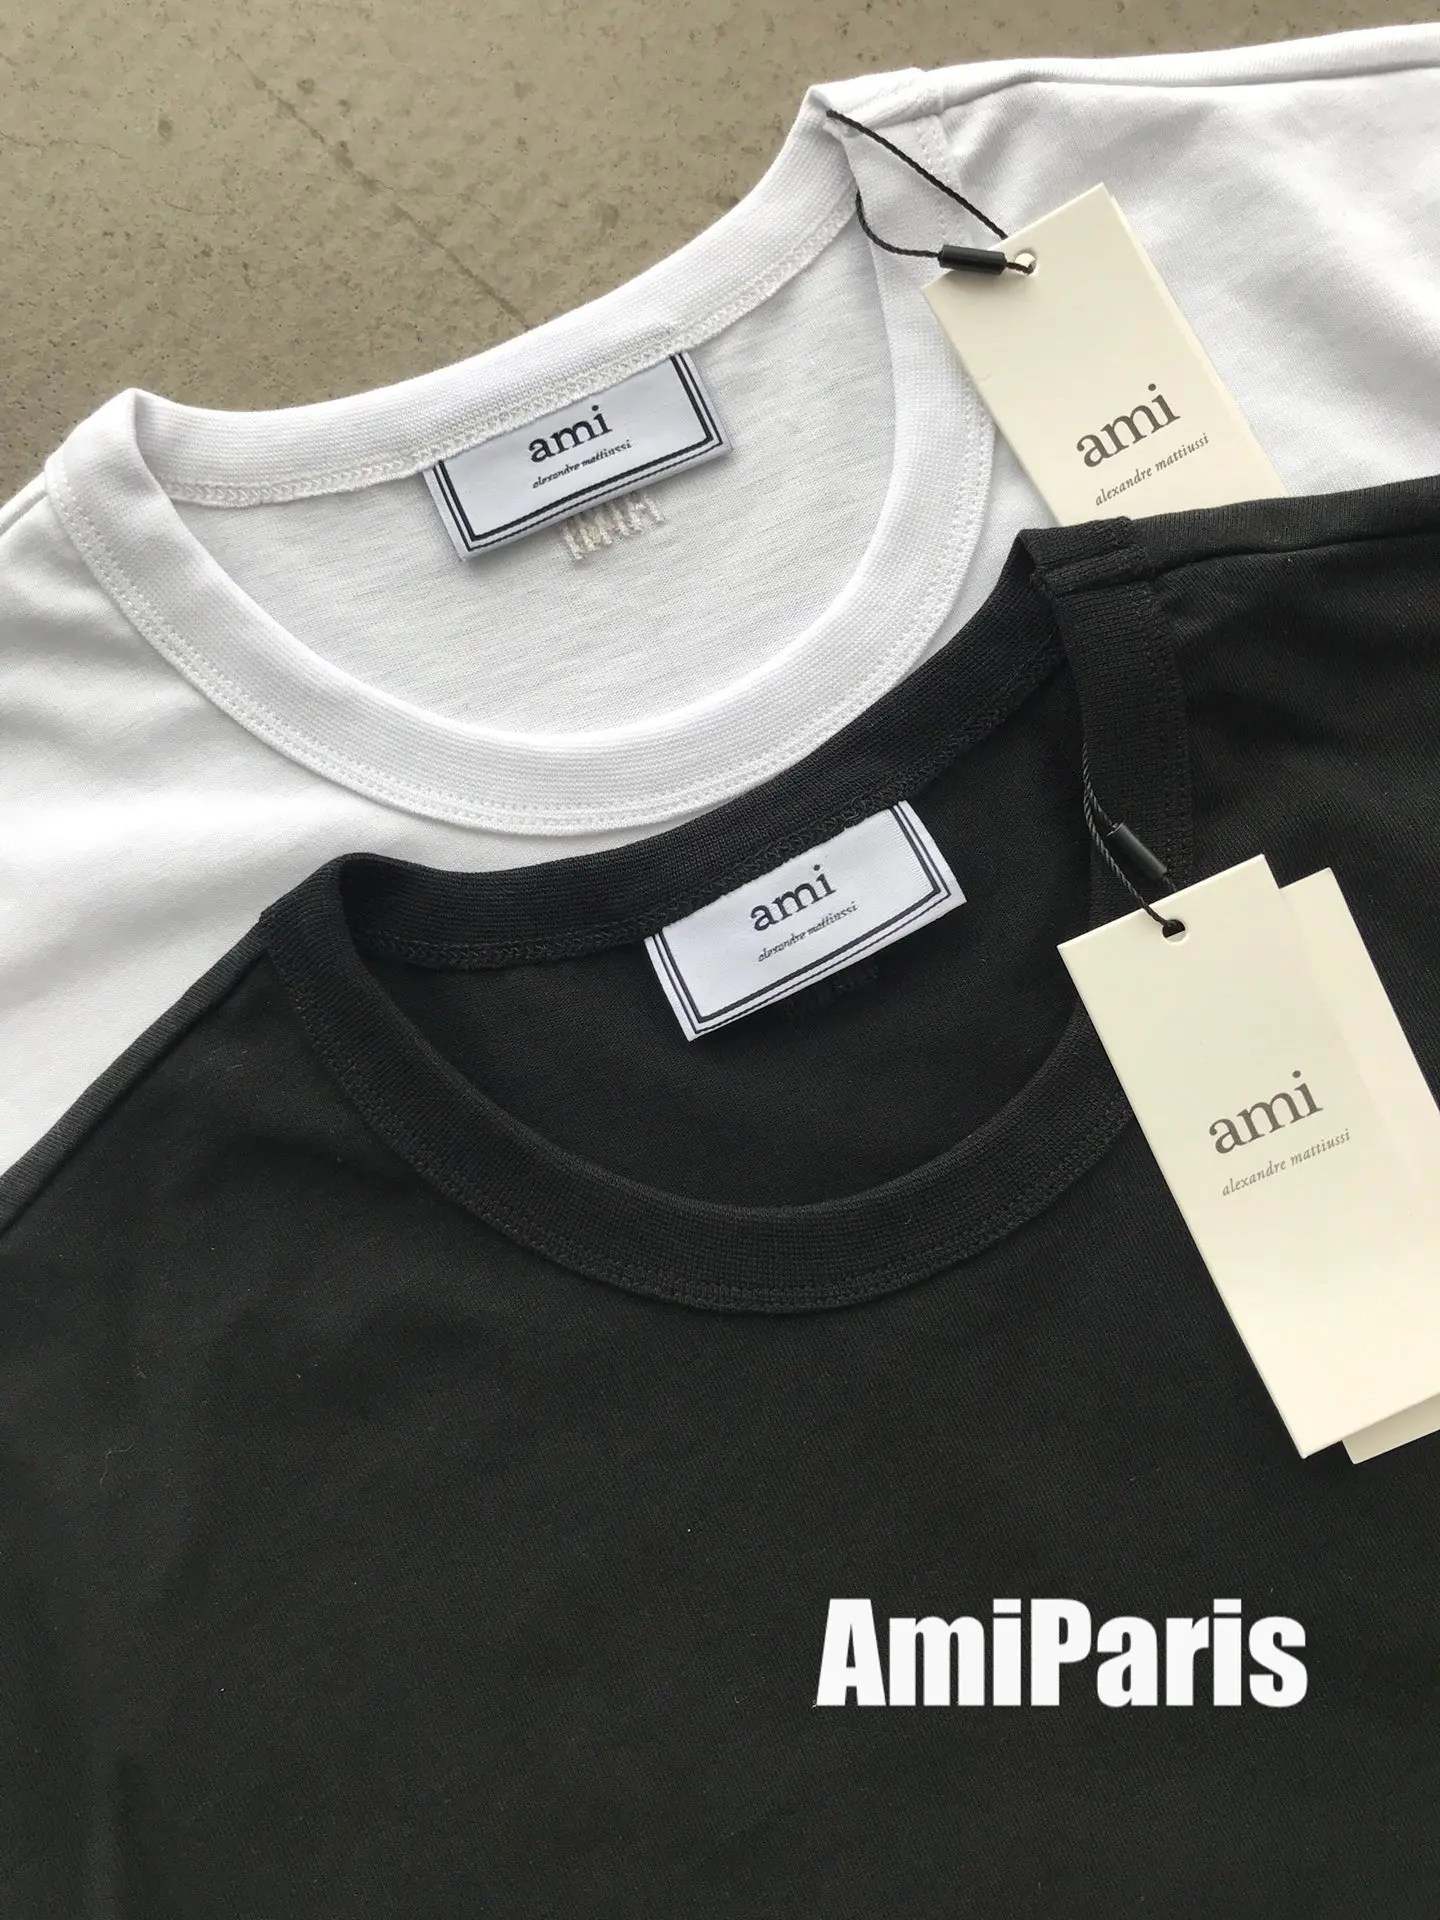 

2021 France Ami Paris De Coeur Men Women Tshirts Embroidery Cotton 1:1 Quality T Shirt Short Sleeve Clothing Love Heart Clothes